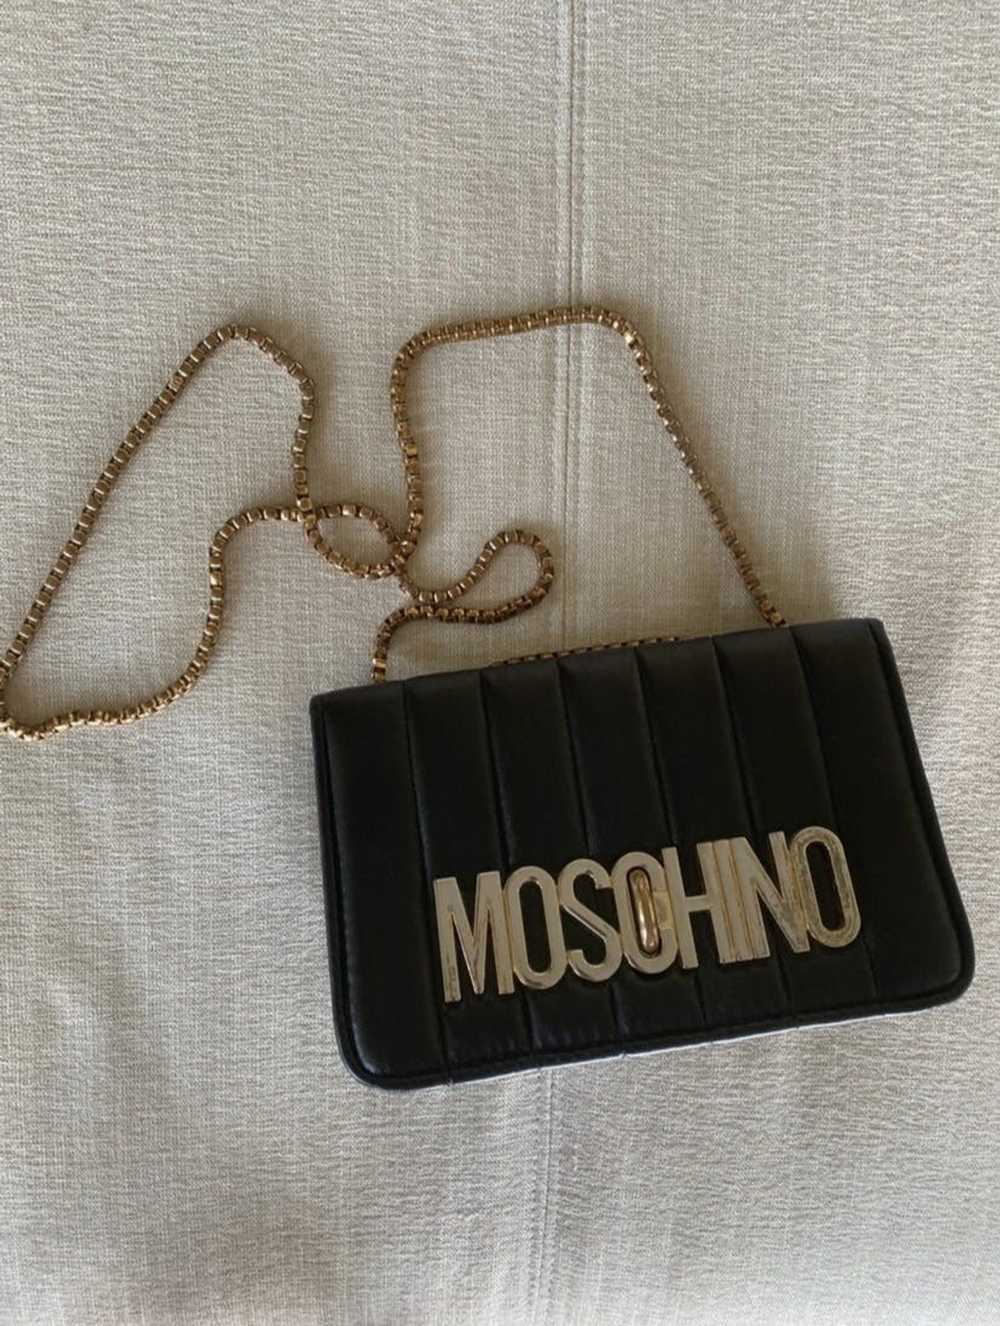 Moschino × Vintage Vintage moschino leather bag - image 1